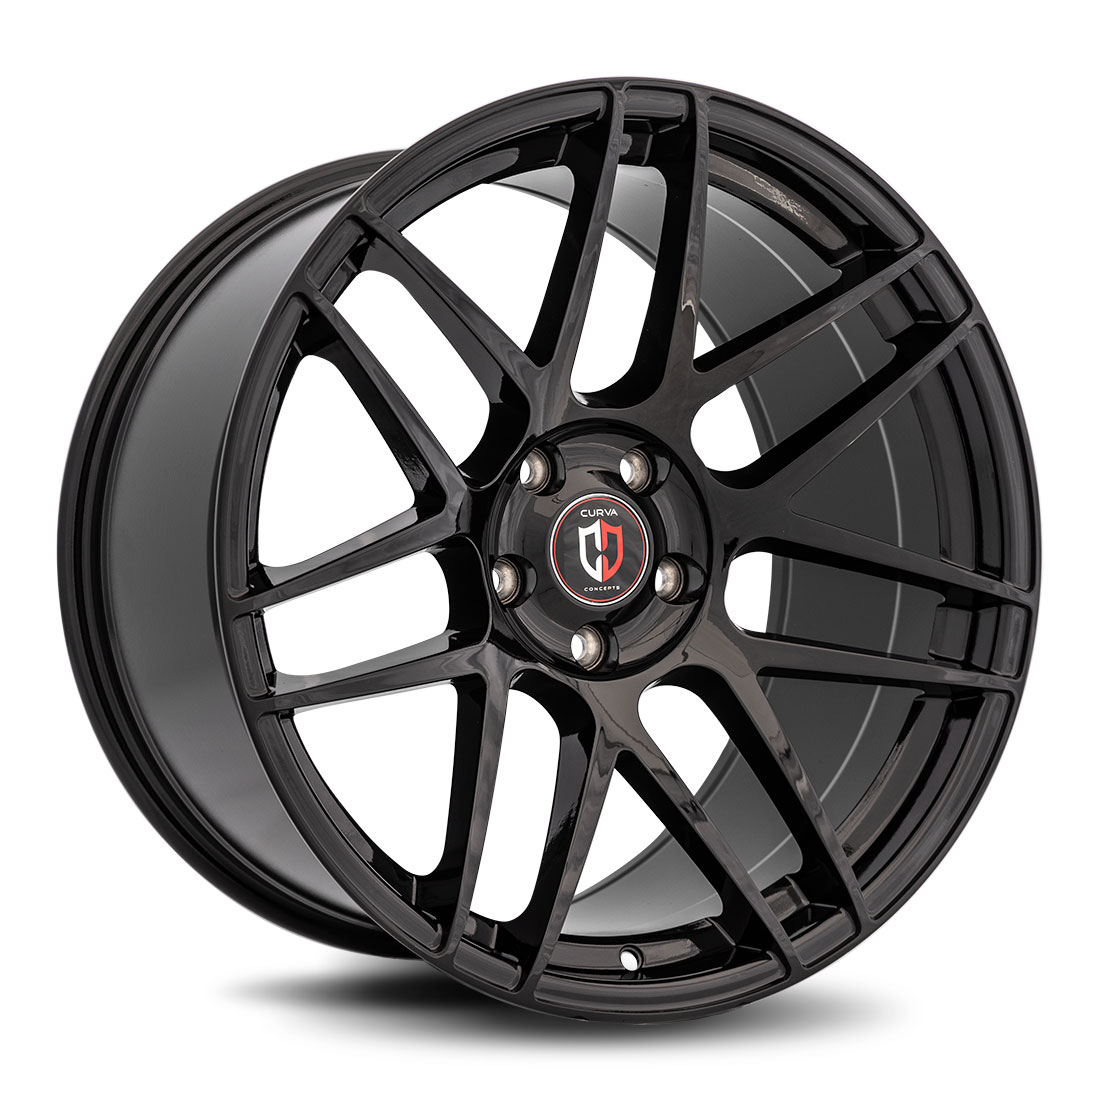 Curva Concepts C300 20 Inch Gloss Black Aftermarket Wheels